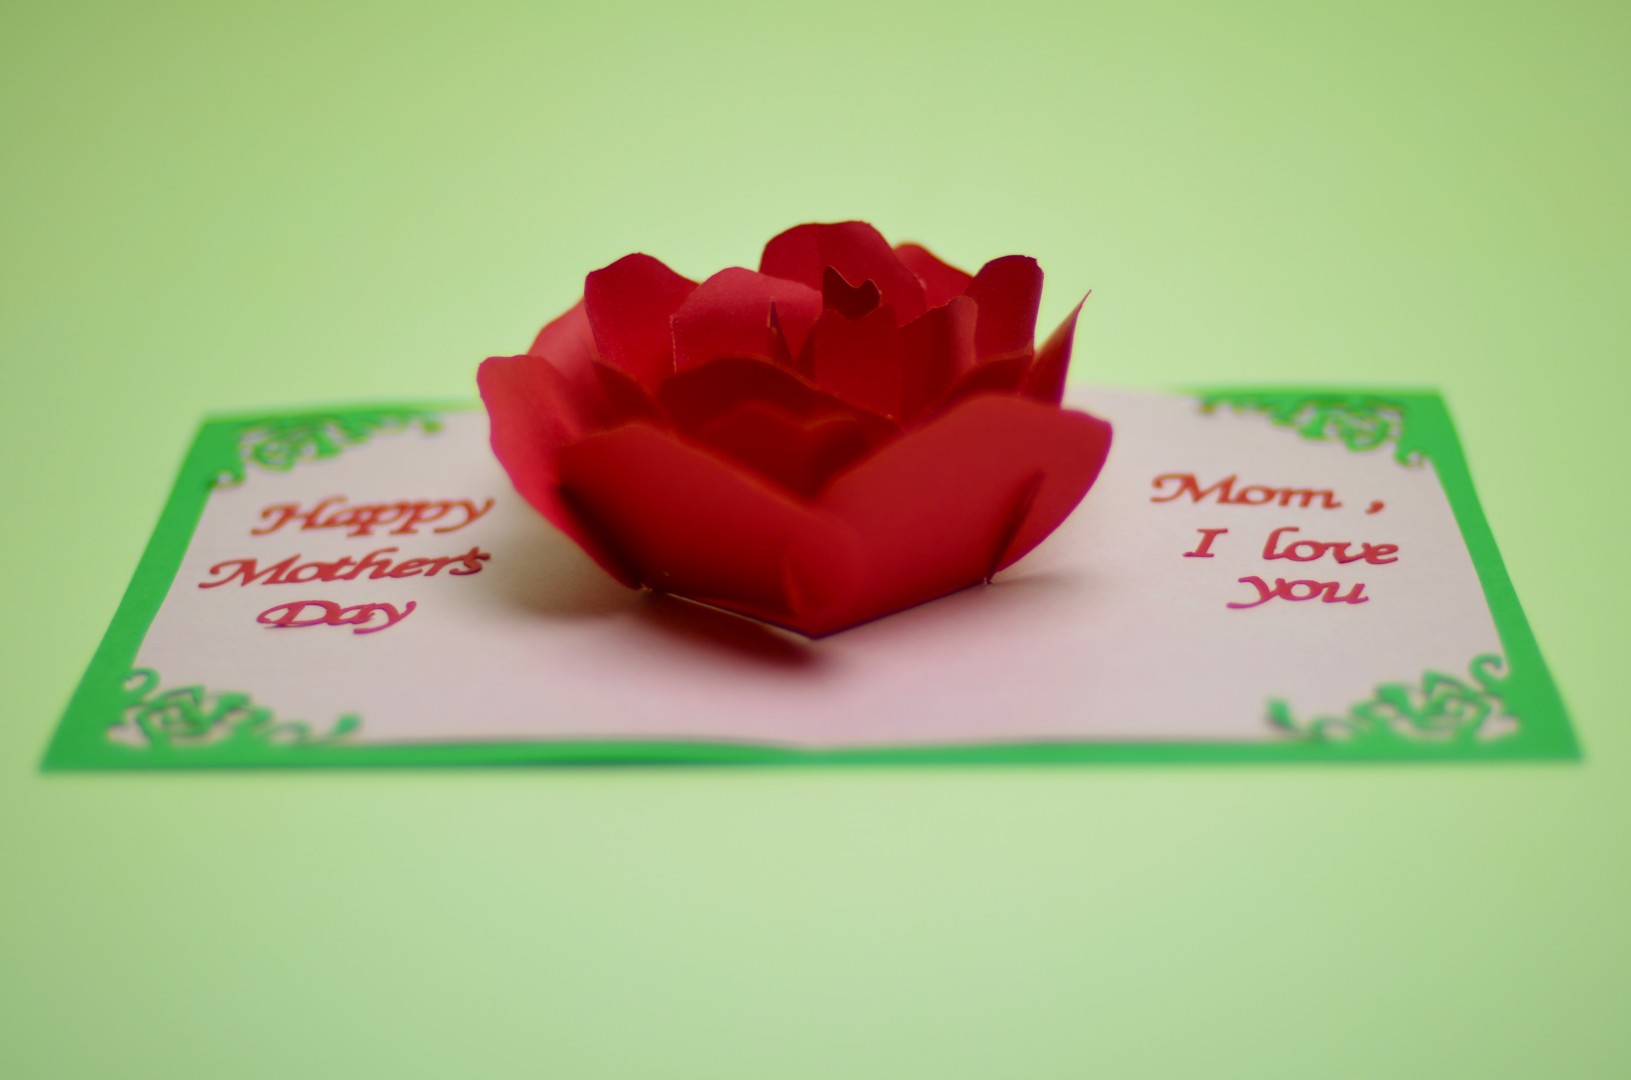 Rose Flower Pop Up Card Tutorial Creative Pop Up Cards